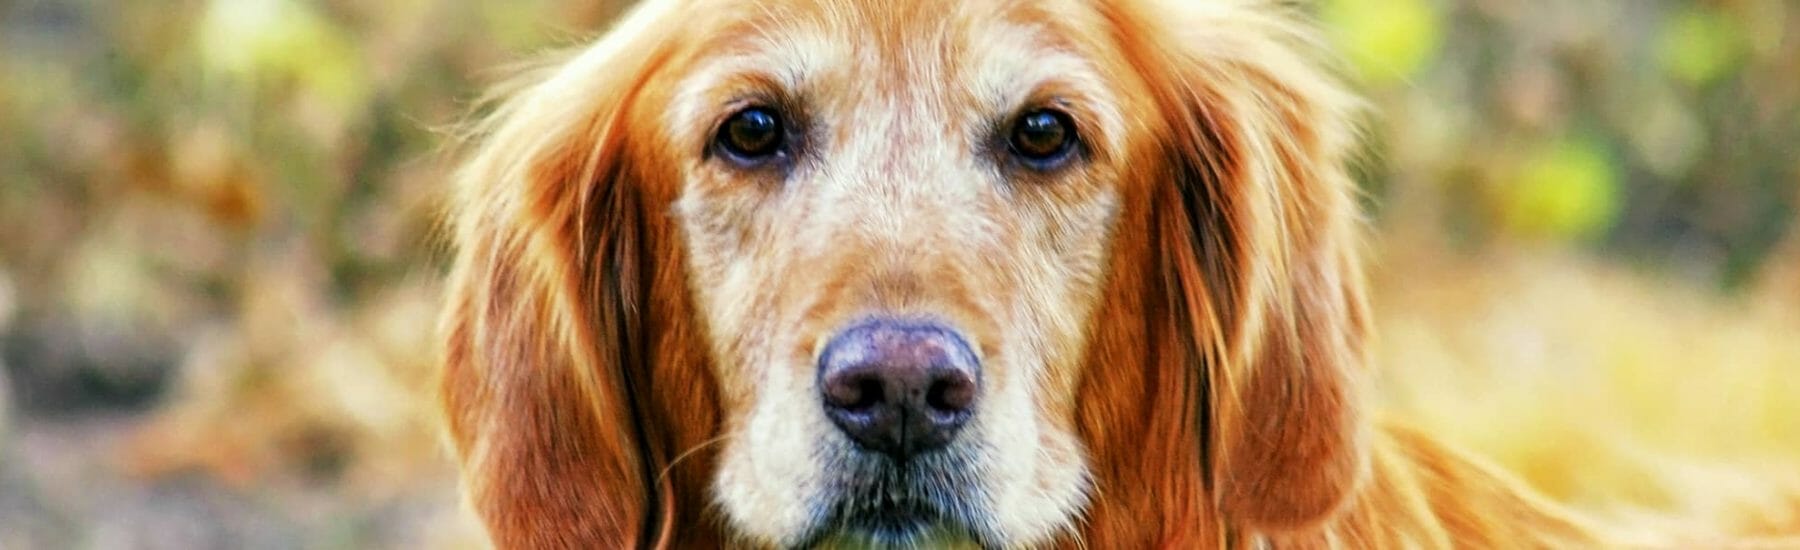 Senior golden dog looking towards camera